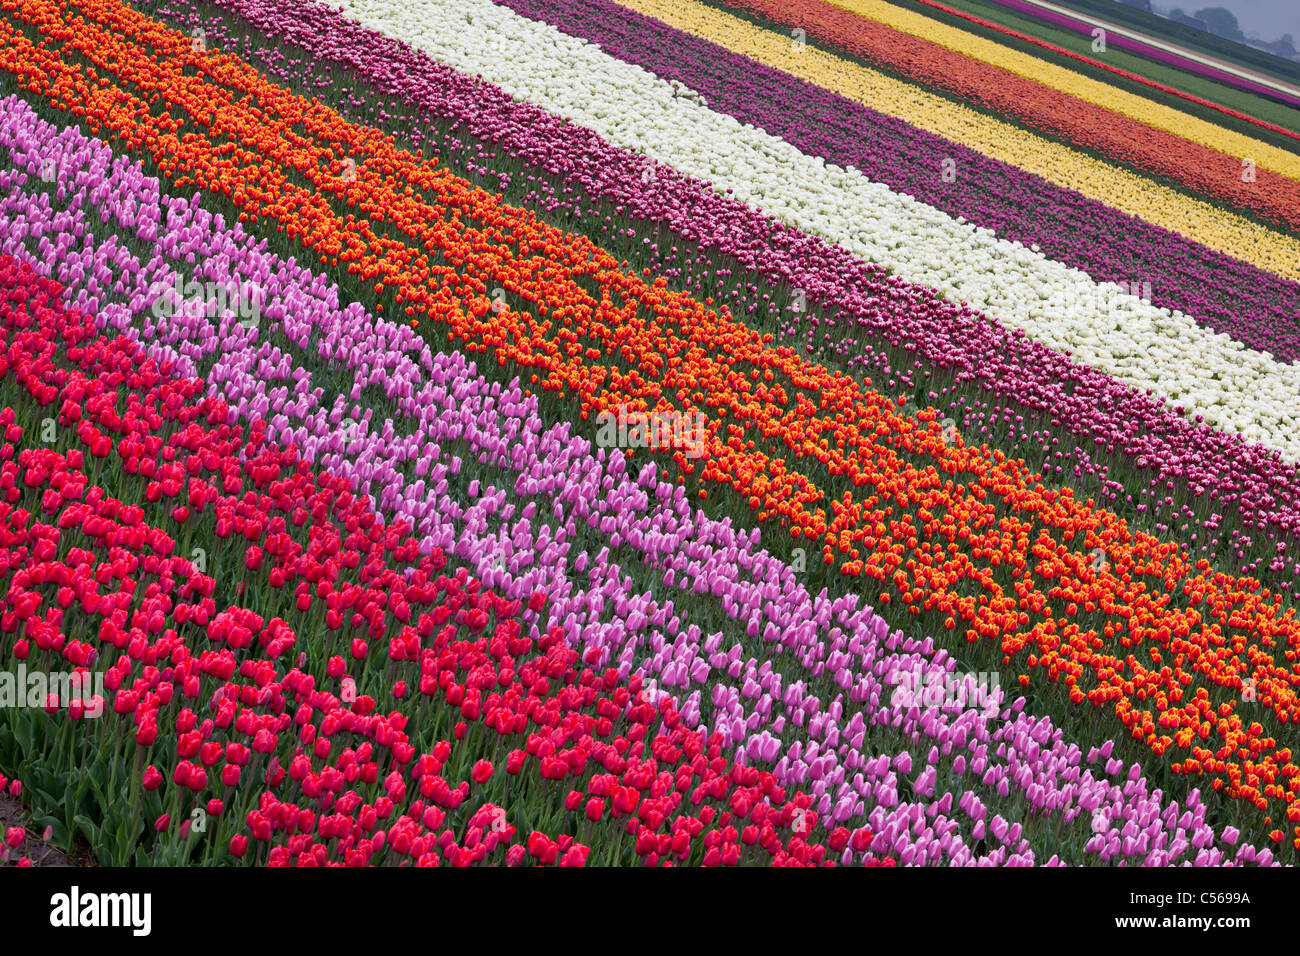 The Netherlands, Egmond, Tulip fields. Stock Photo